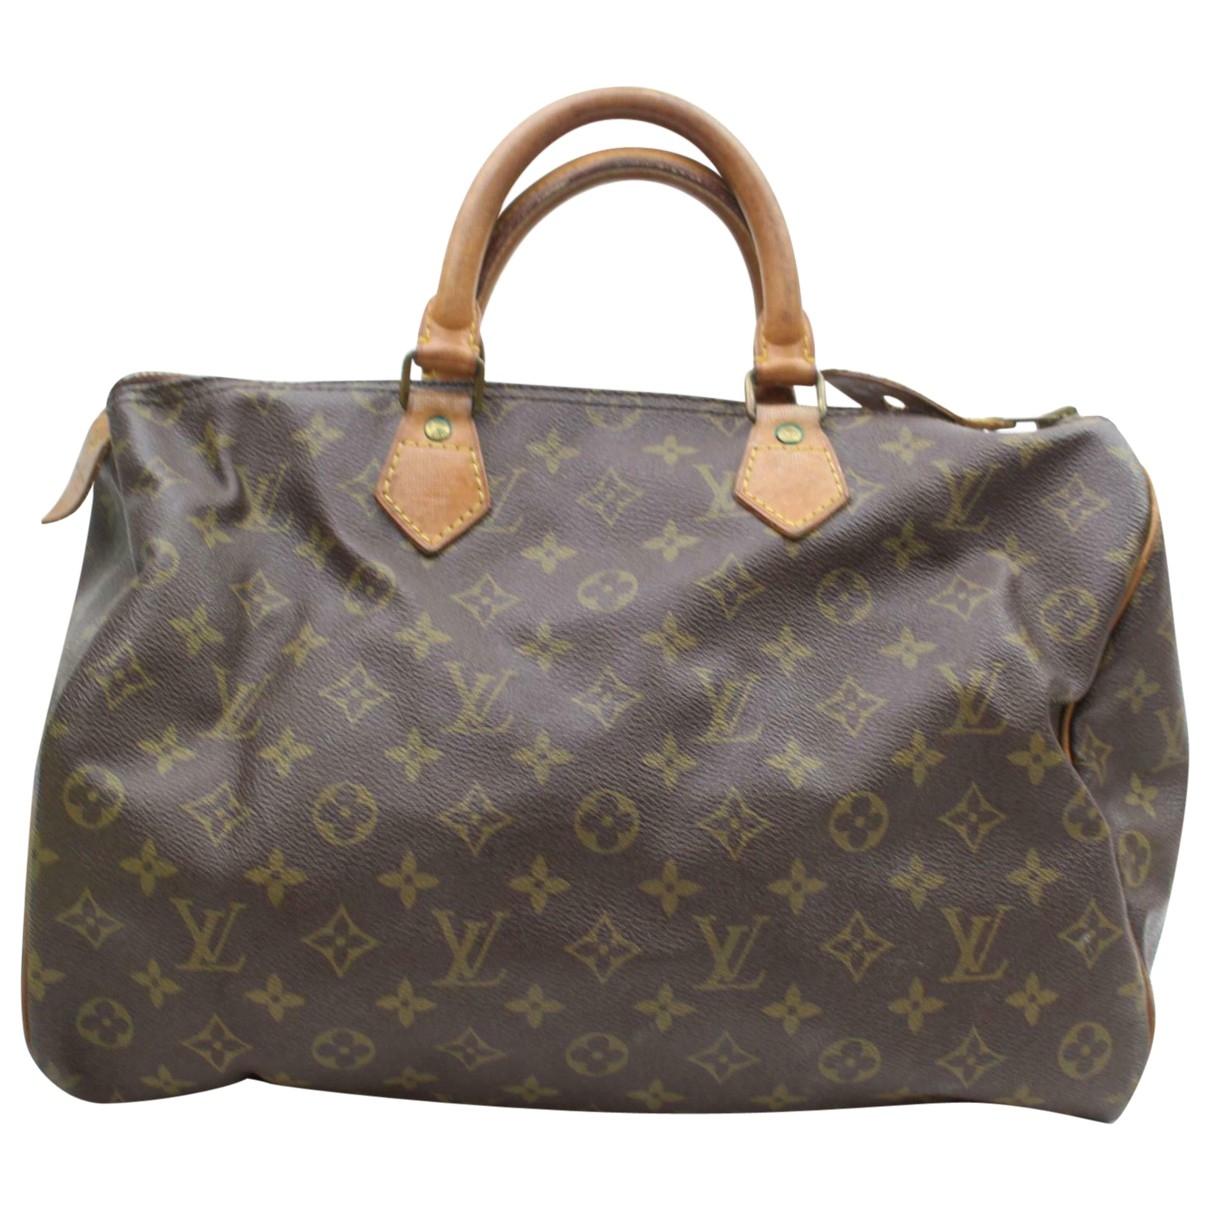 Lyst - Louis Vuitton Vintage Speedy Brown Leather Handbag in Brown